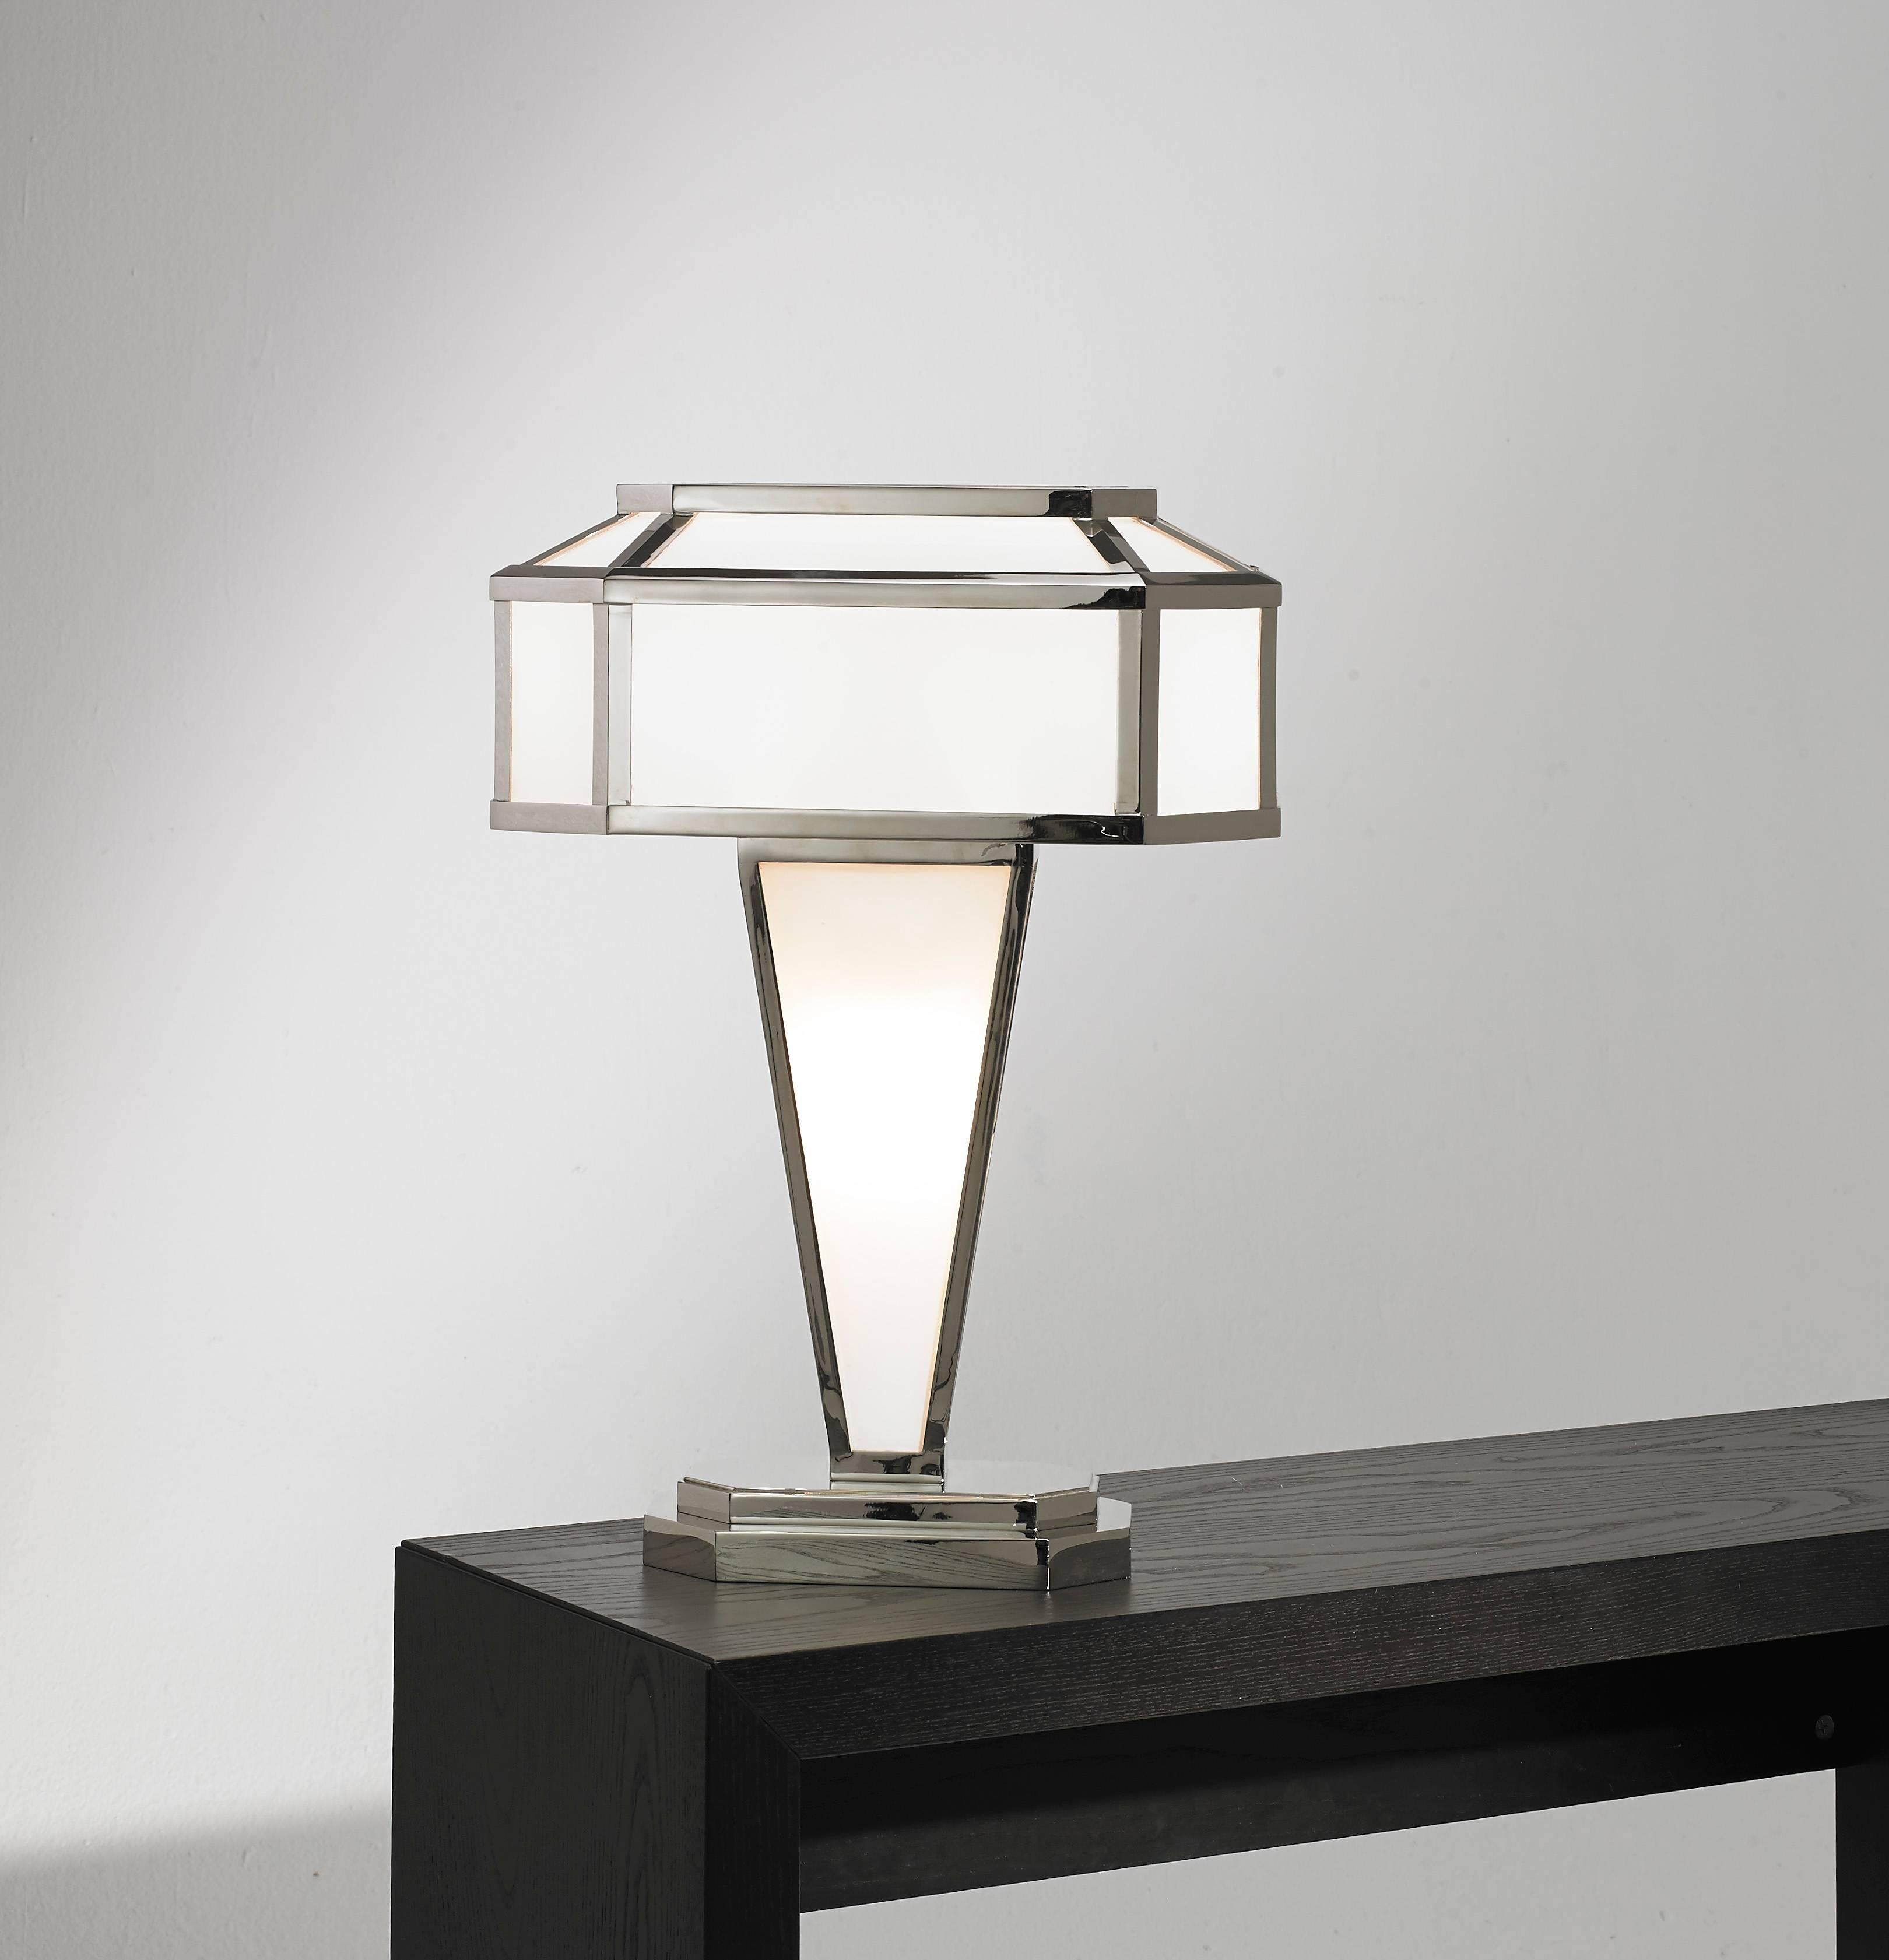 Lampe moderniste Art déco avec finition en nickel.